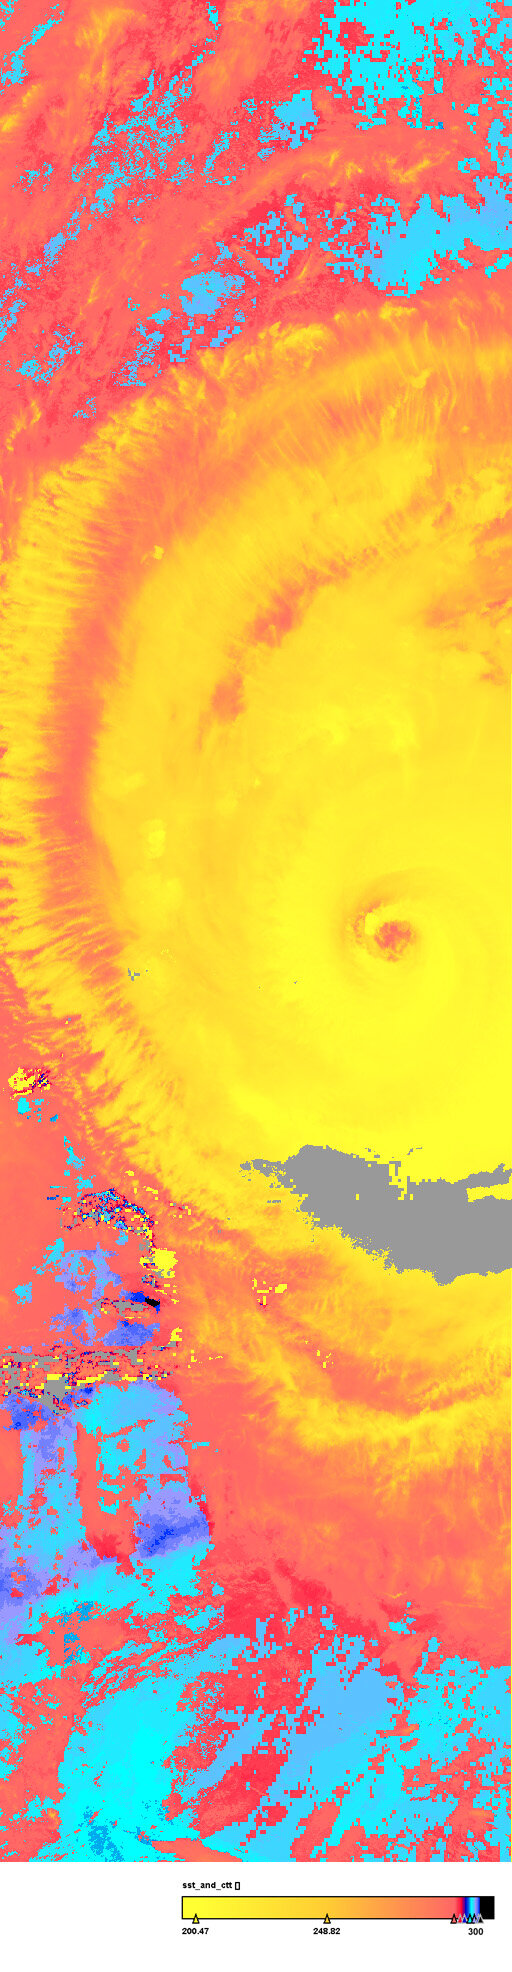 Hurricane Frances seen by AATSR